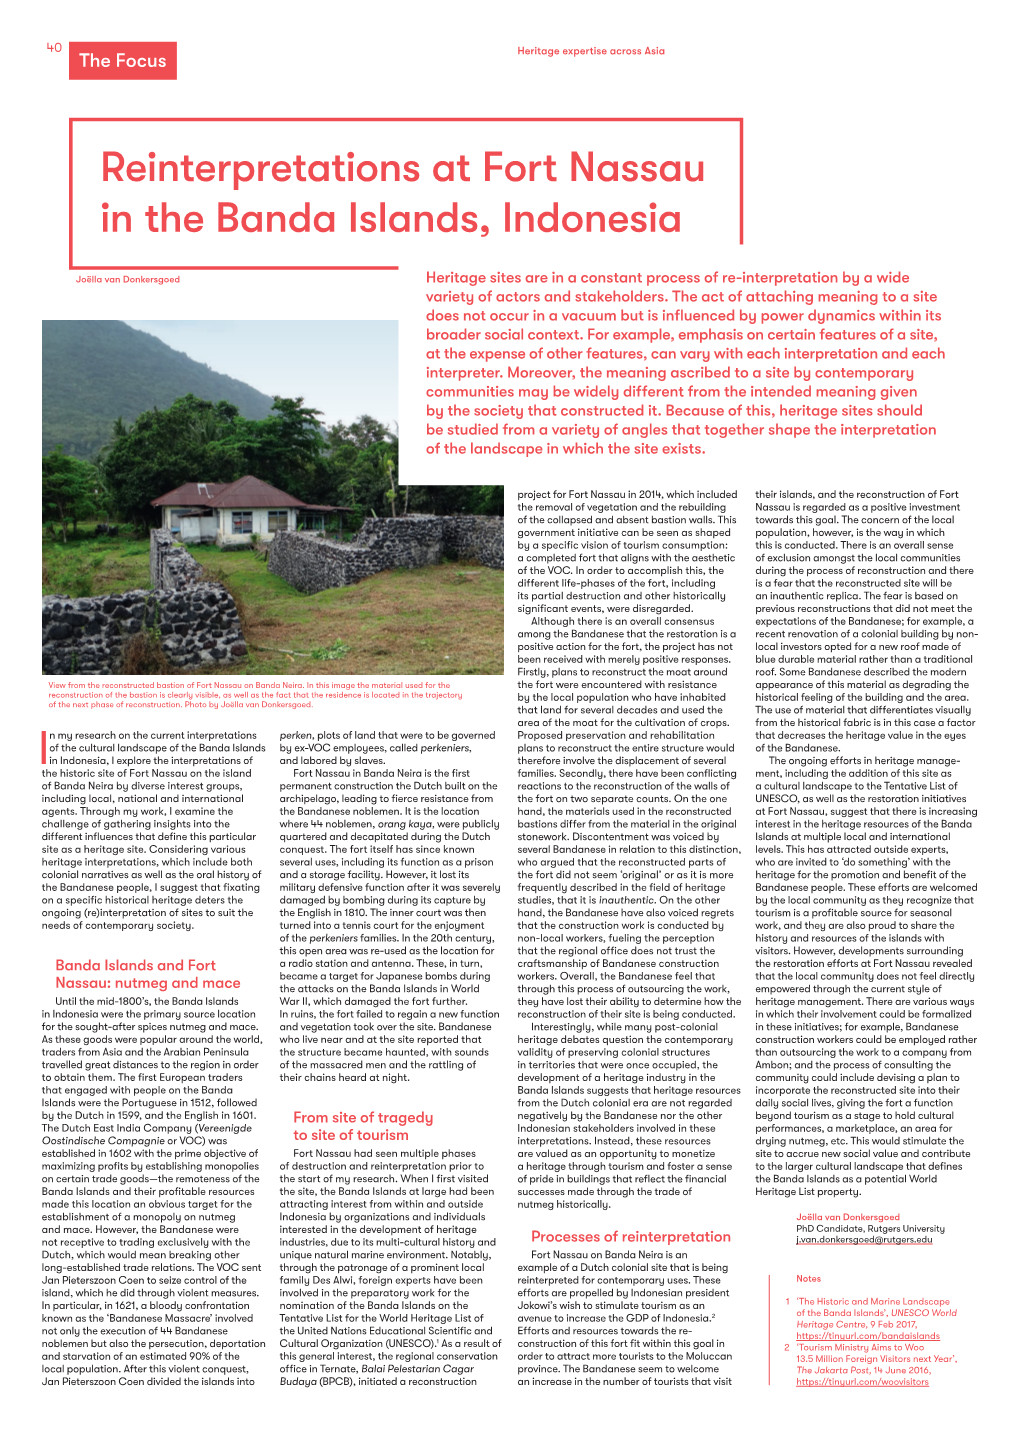 Reinterpretations at Fort Nassau in the Banda Islands, Indonesia